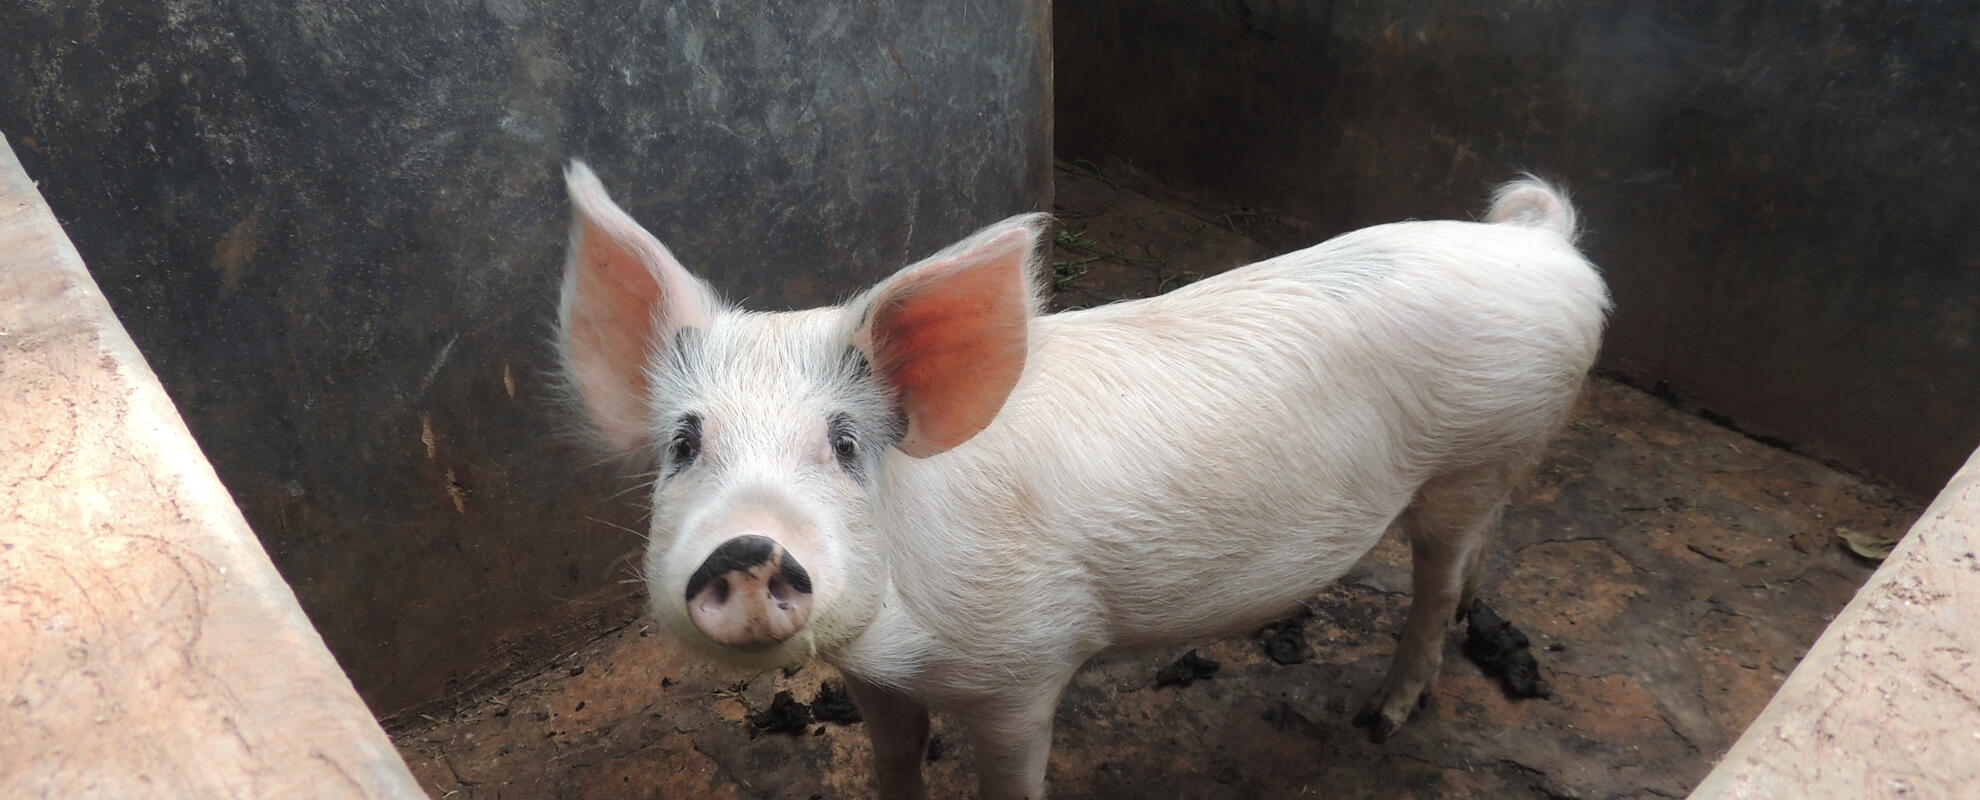 Pig in concrete stable in Mukono District, Uganda